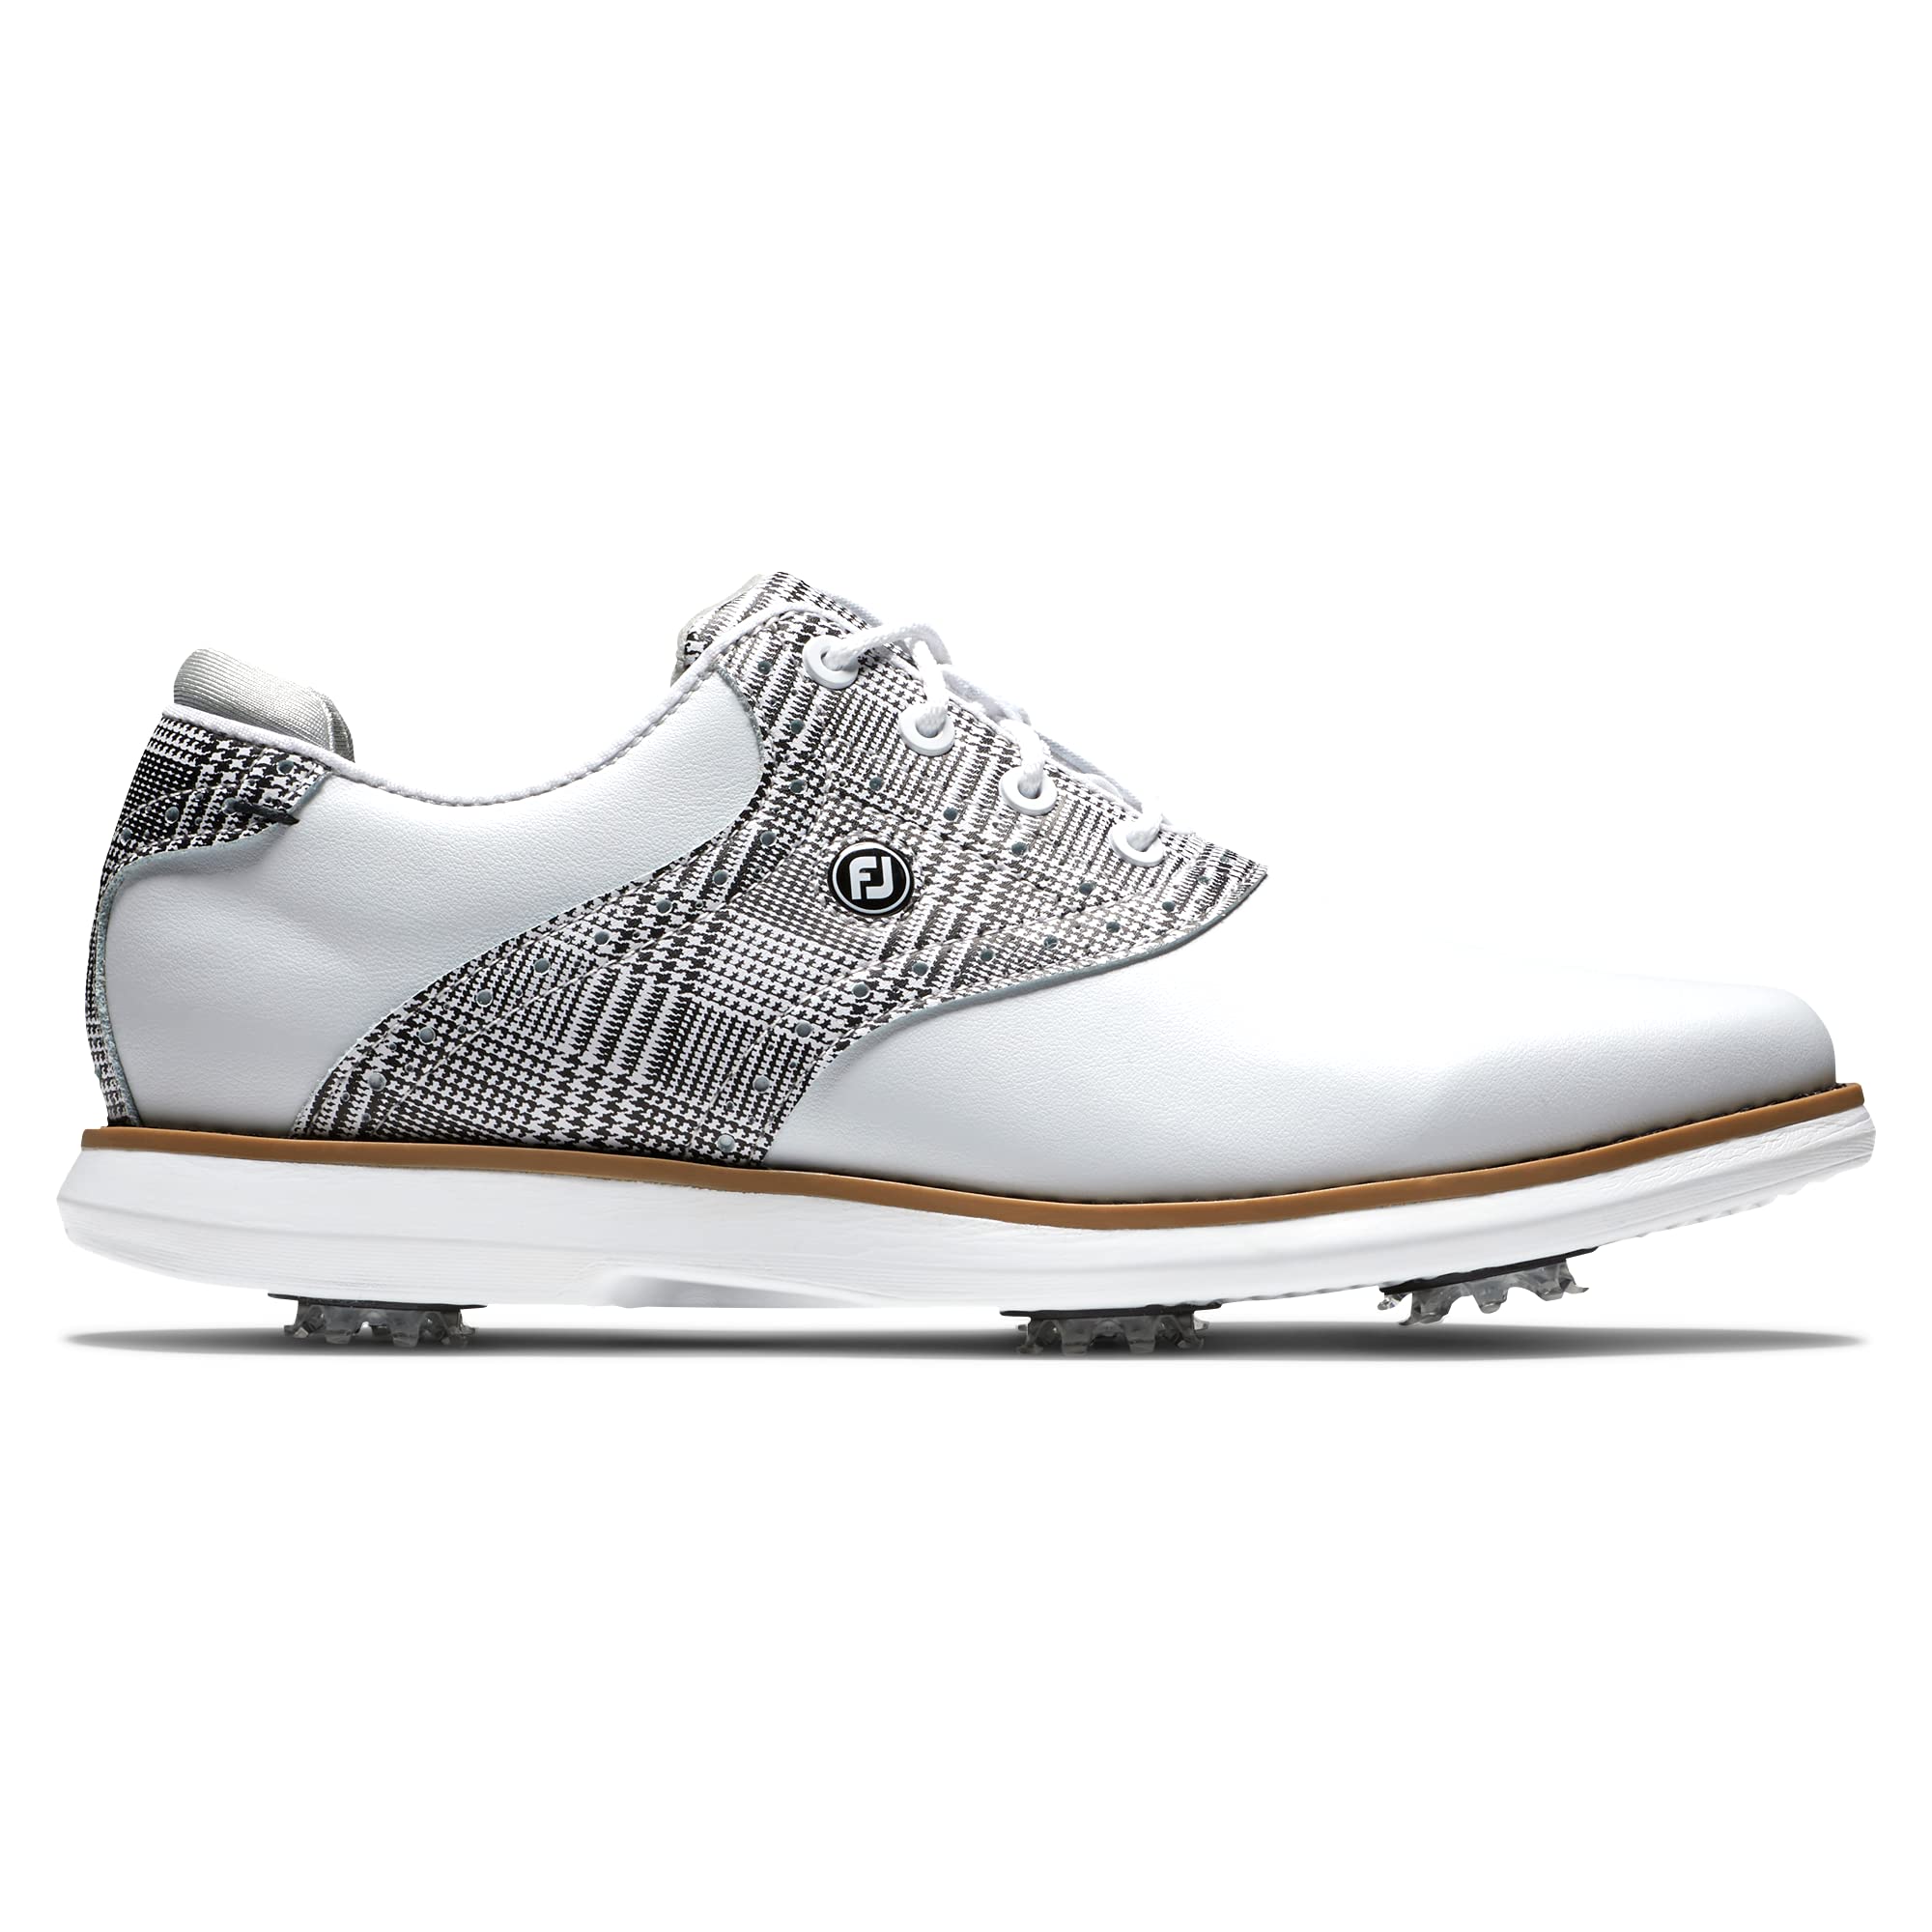 FootJoy Women's Traditions Previous Season Style Golf Shoe, White/Black Plaid, 7